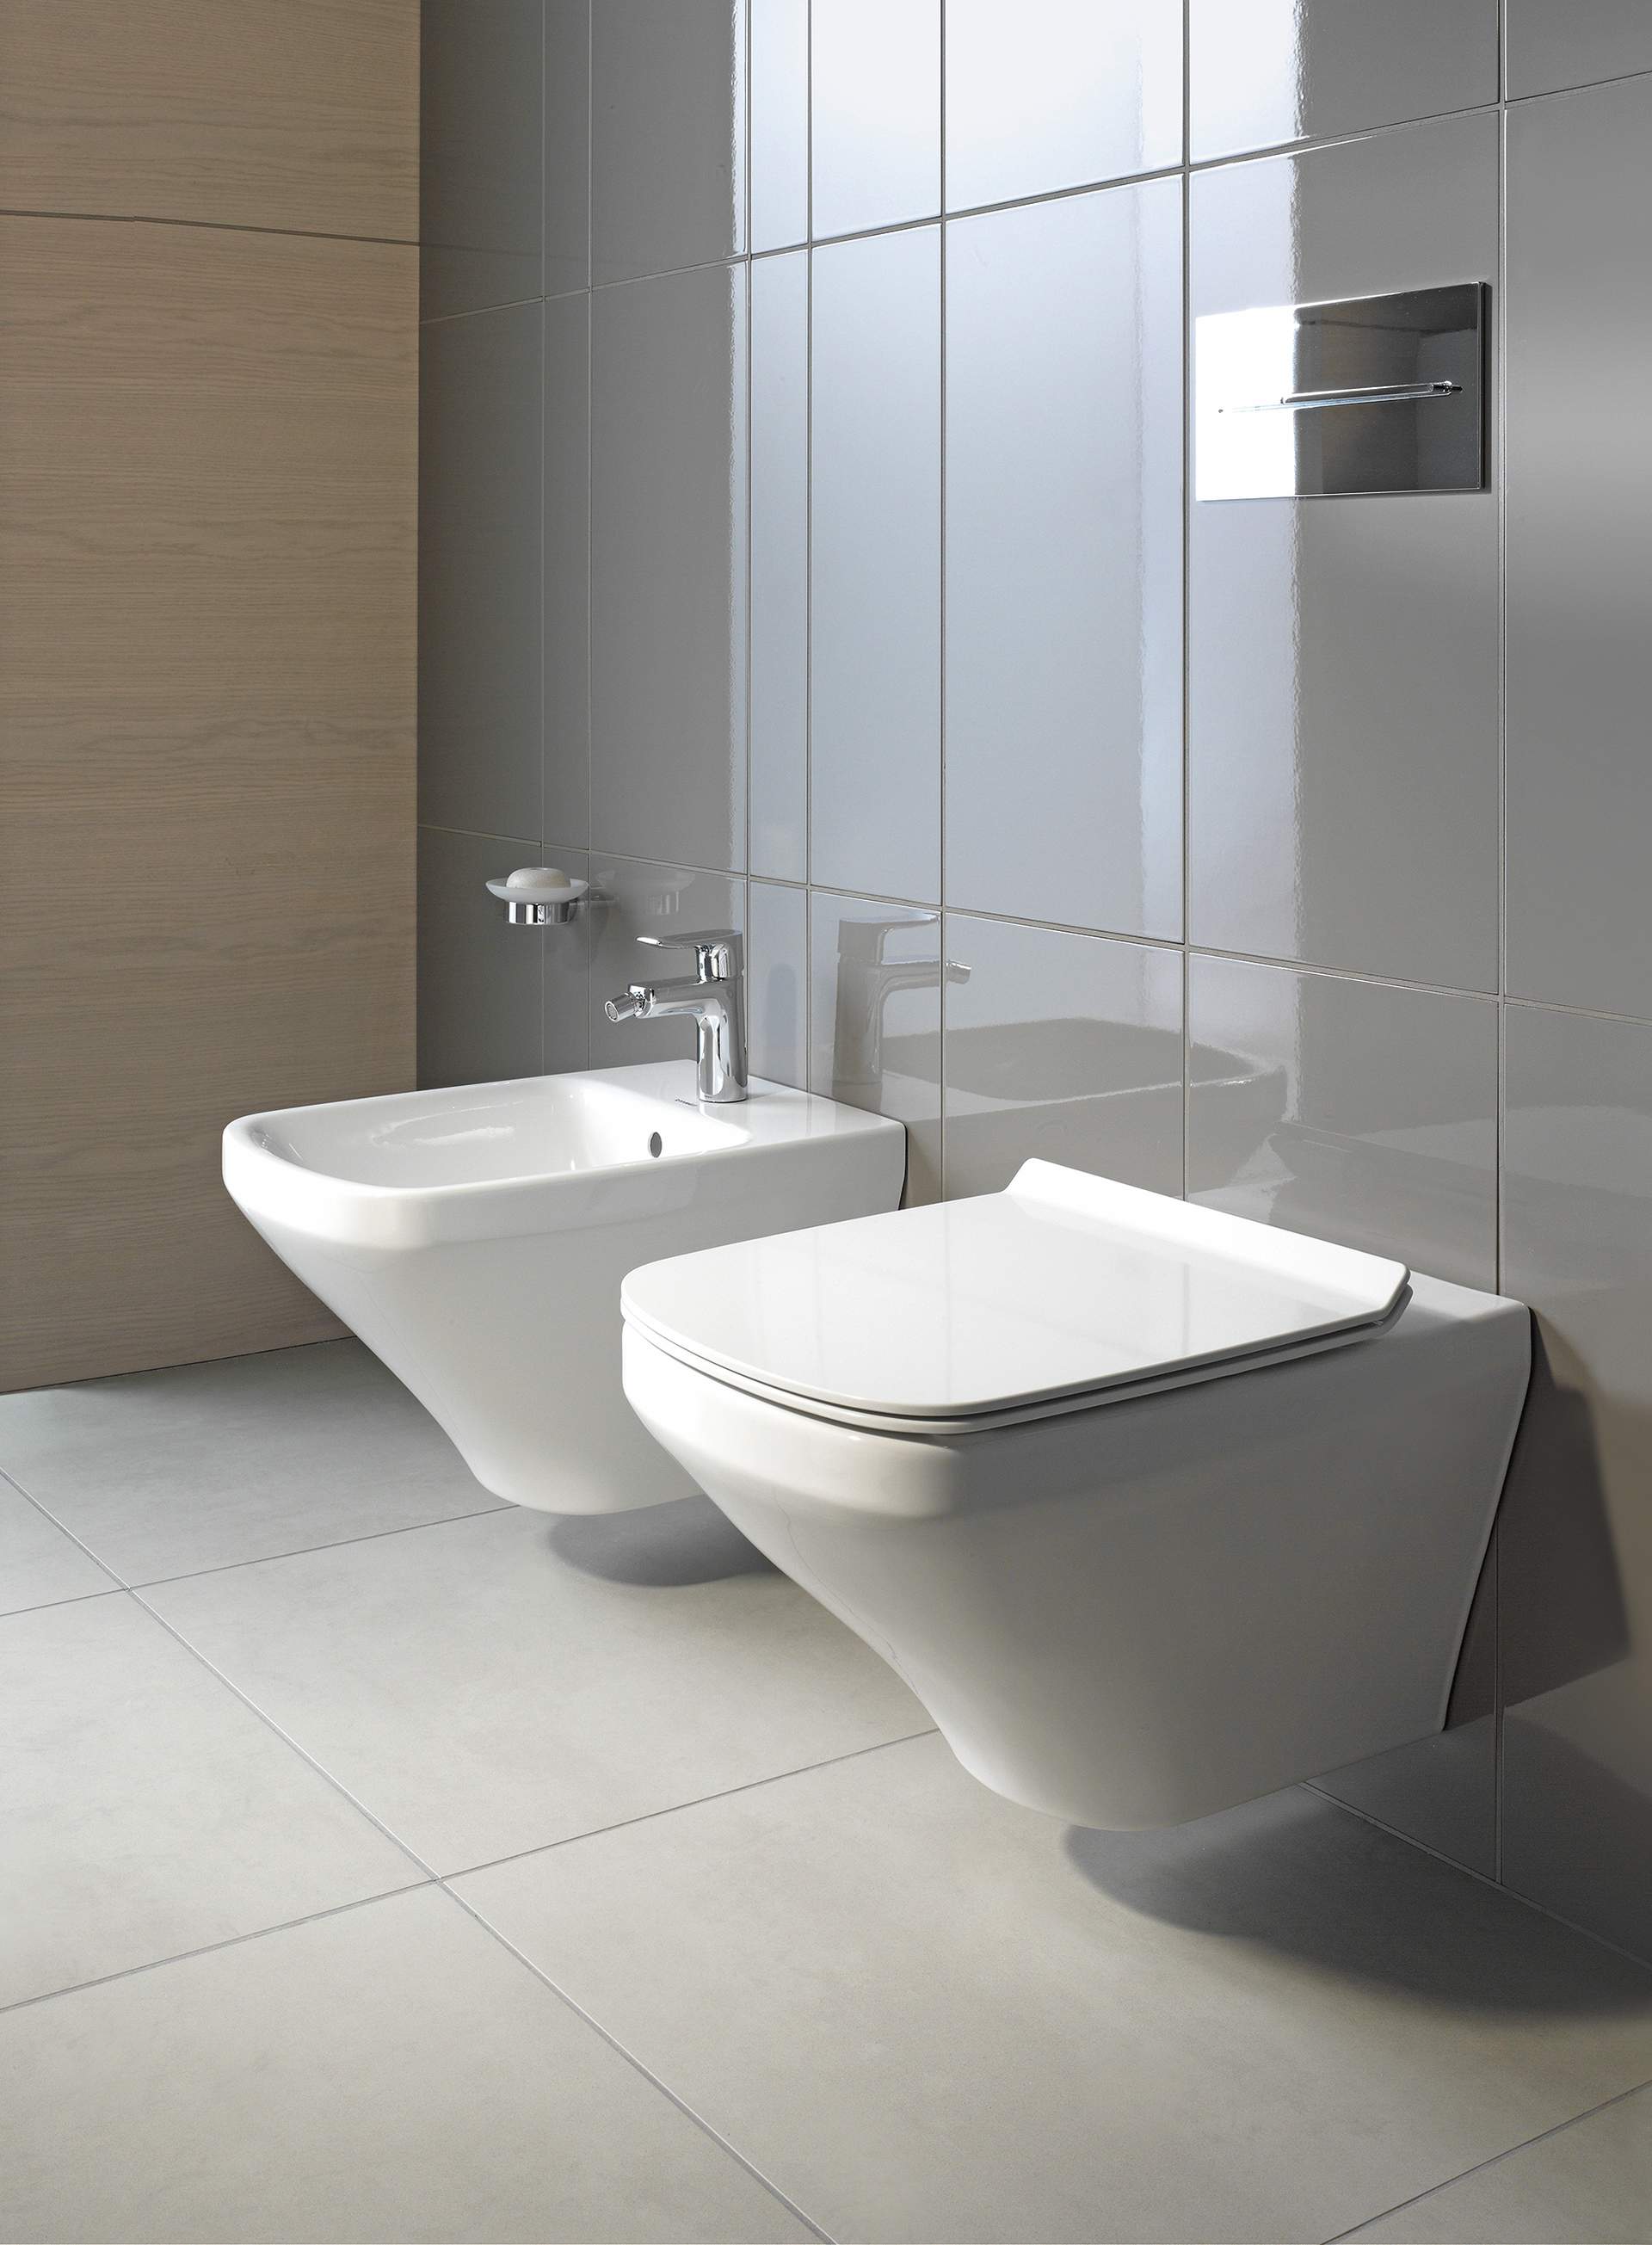 Toilet wall-mounted Duravit Rimless®, 255109